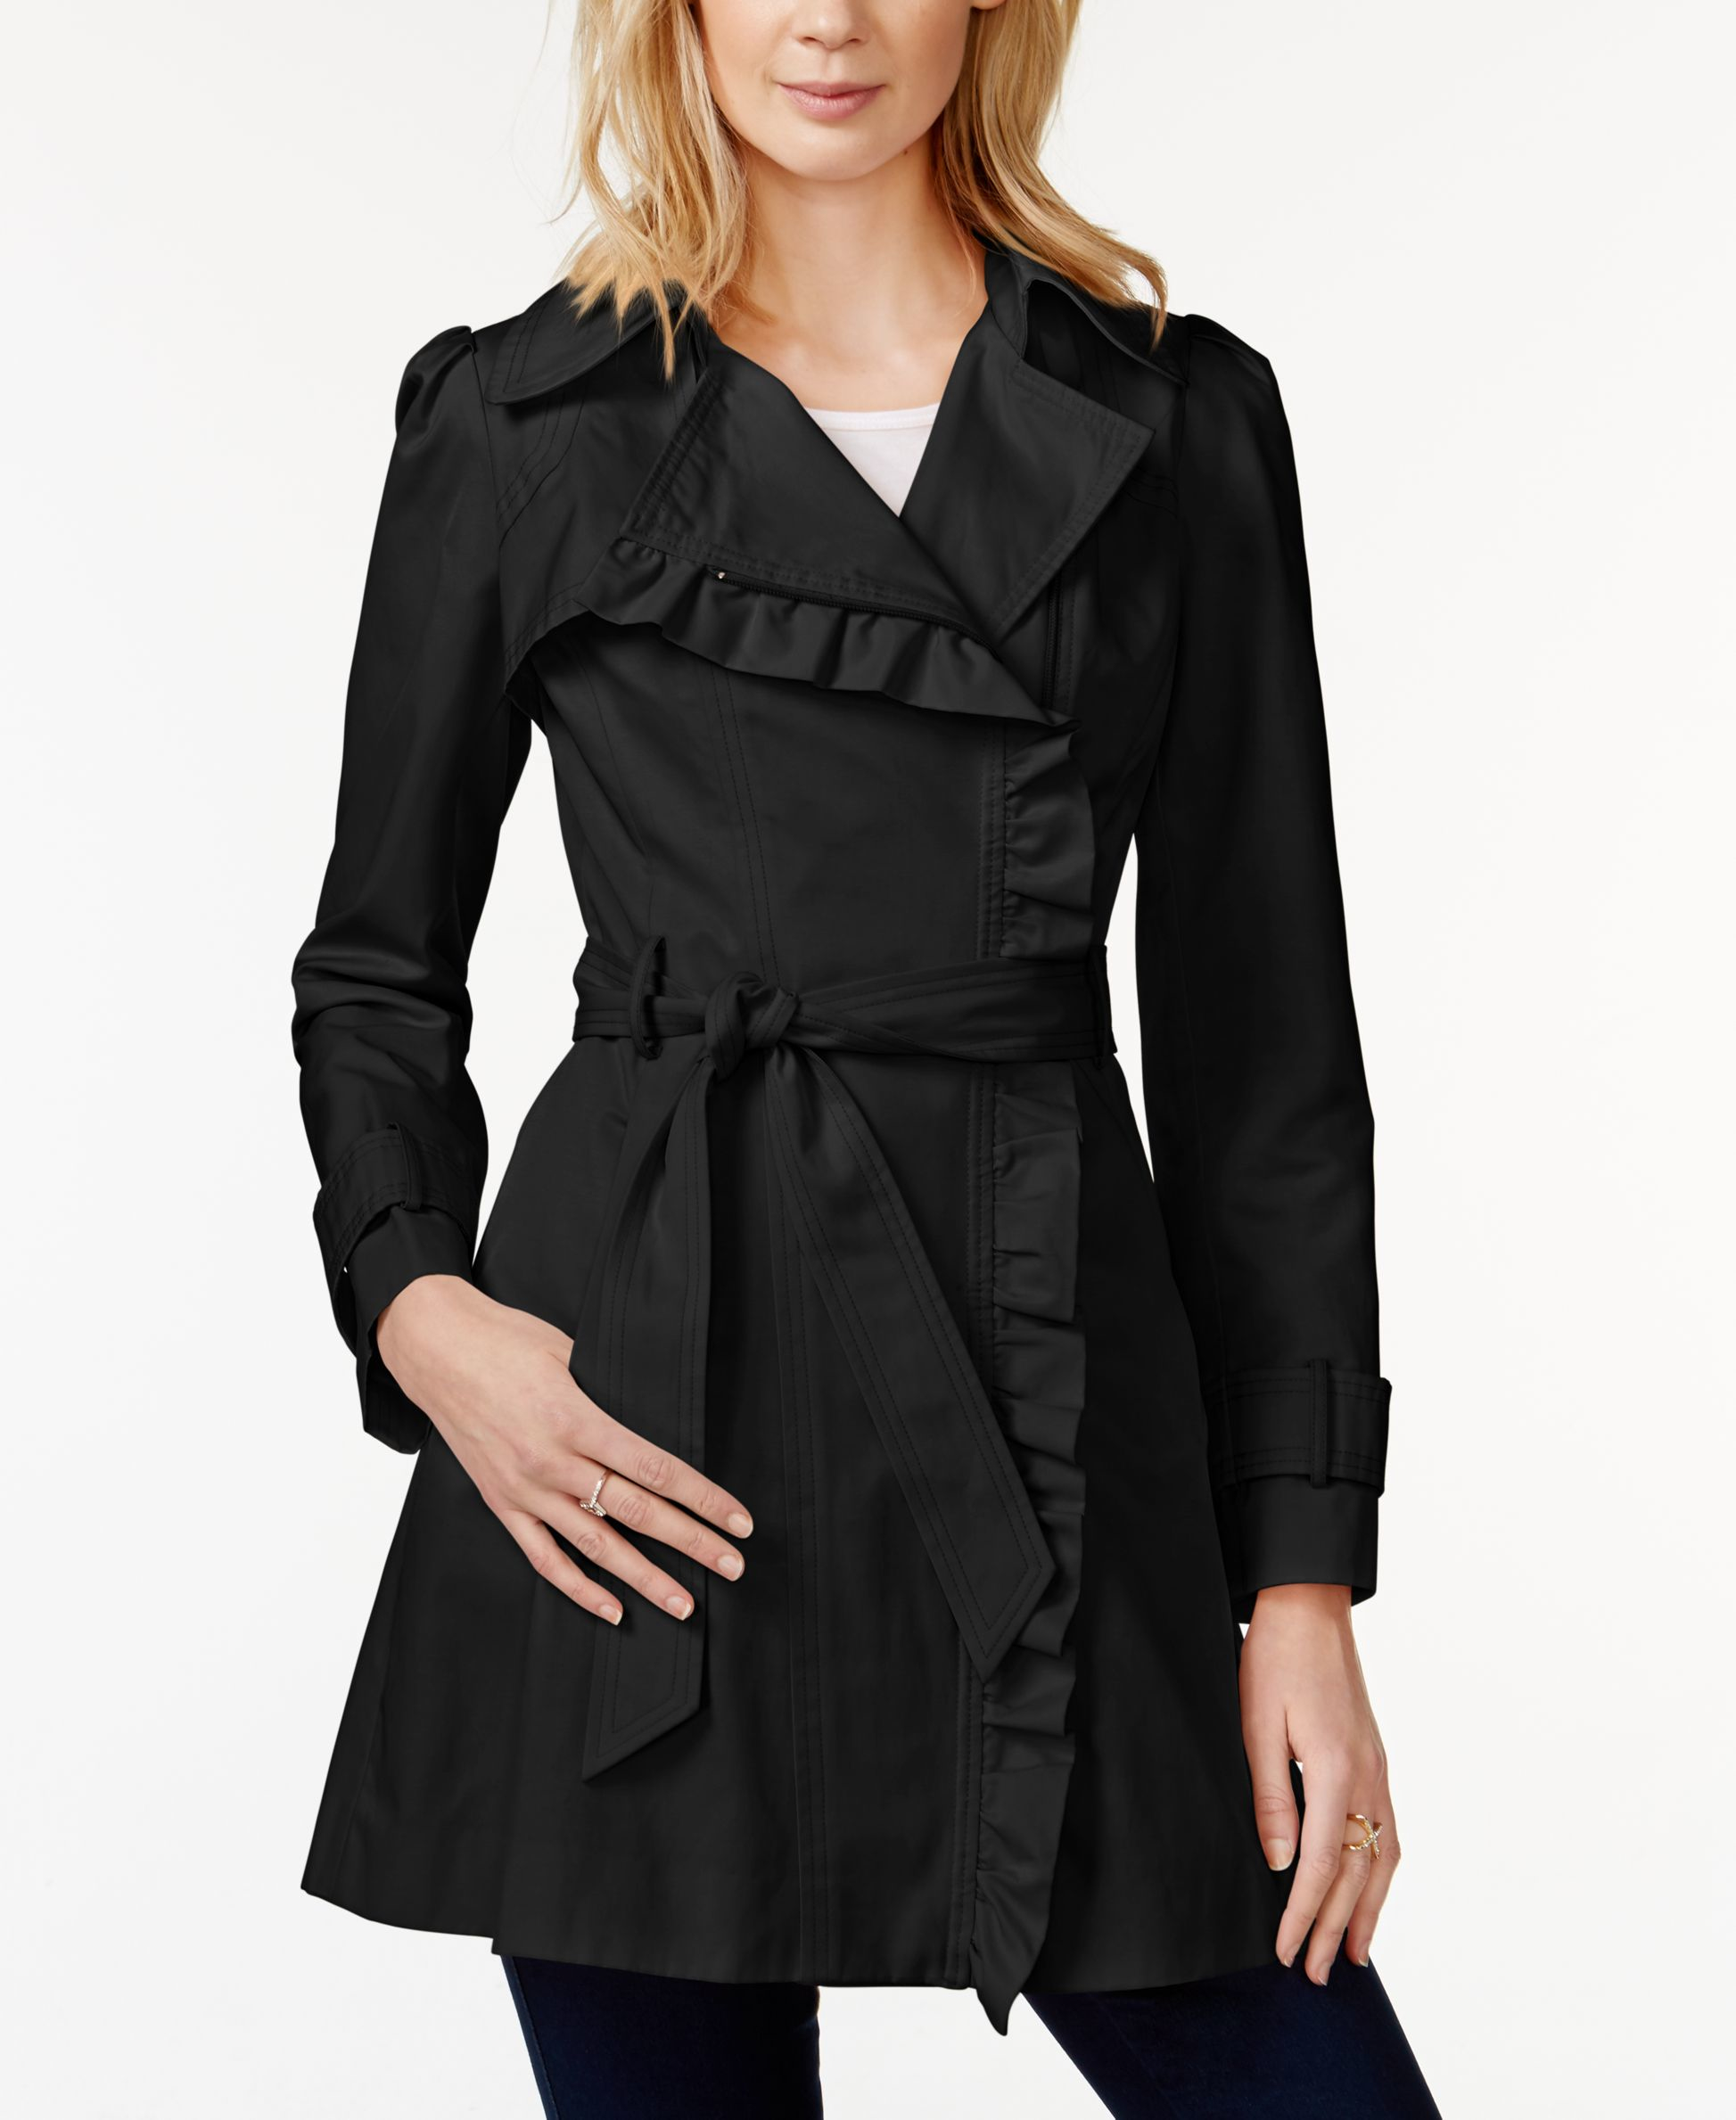 Jessica Simpson Ruffled Asymmetrical Trench Coat in Black - Lyst